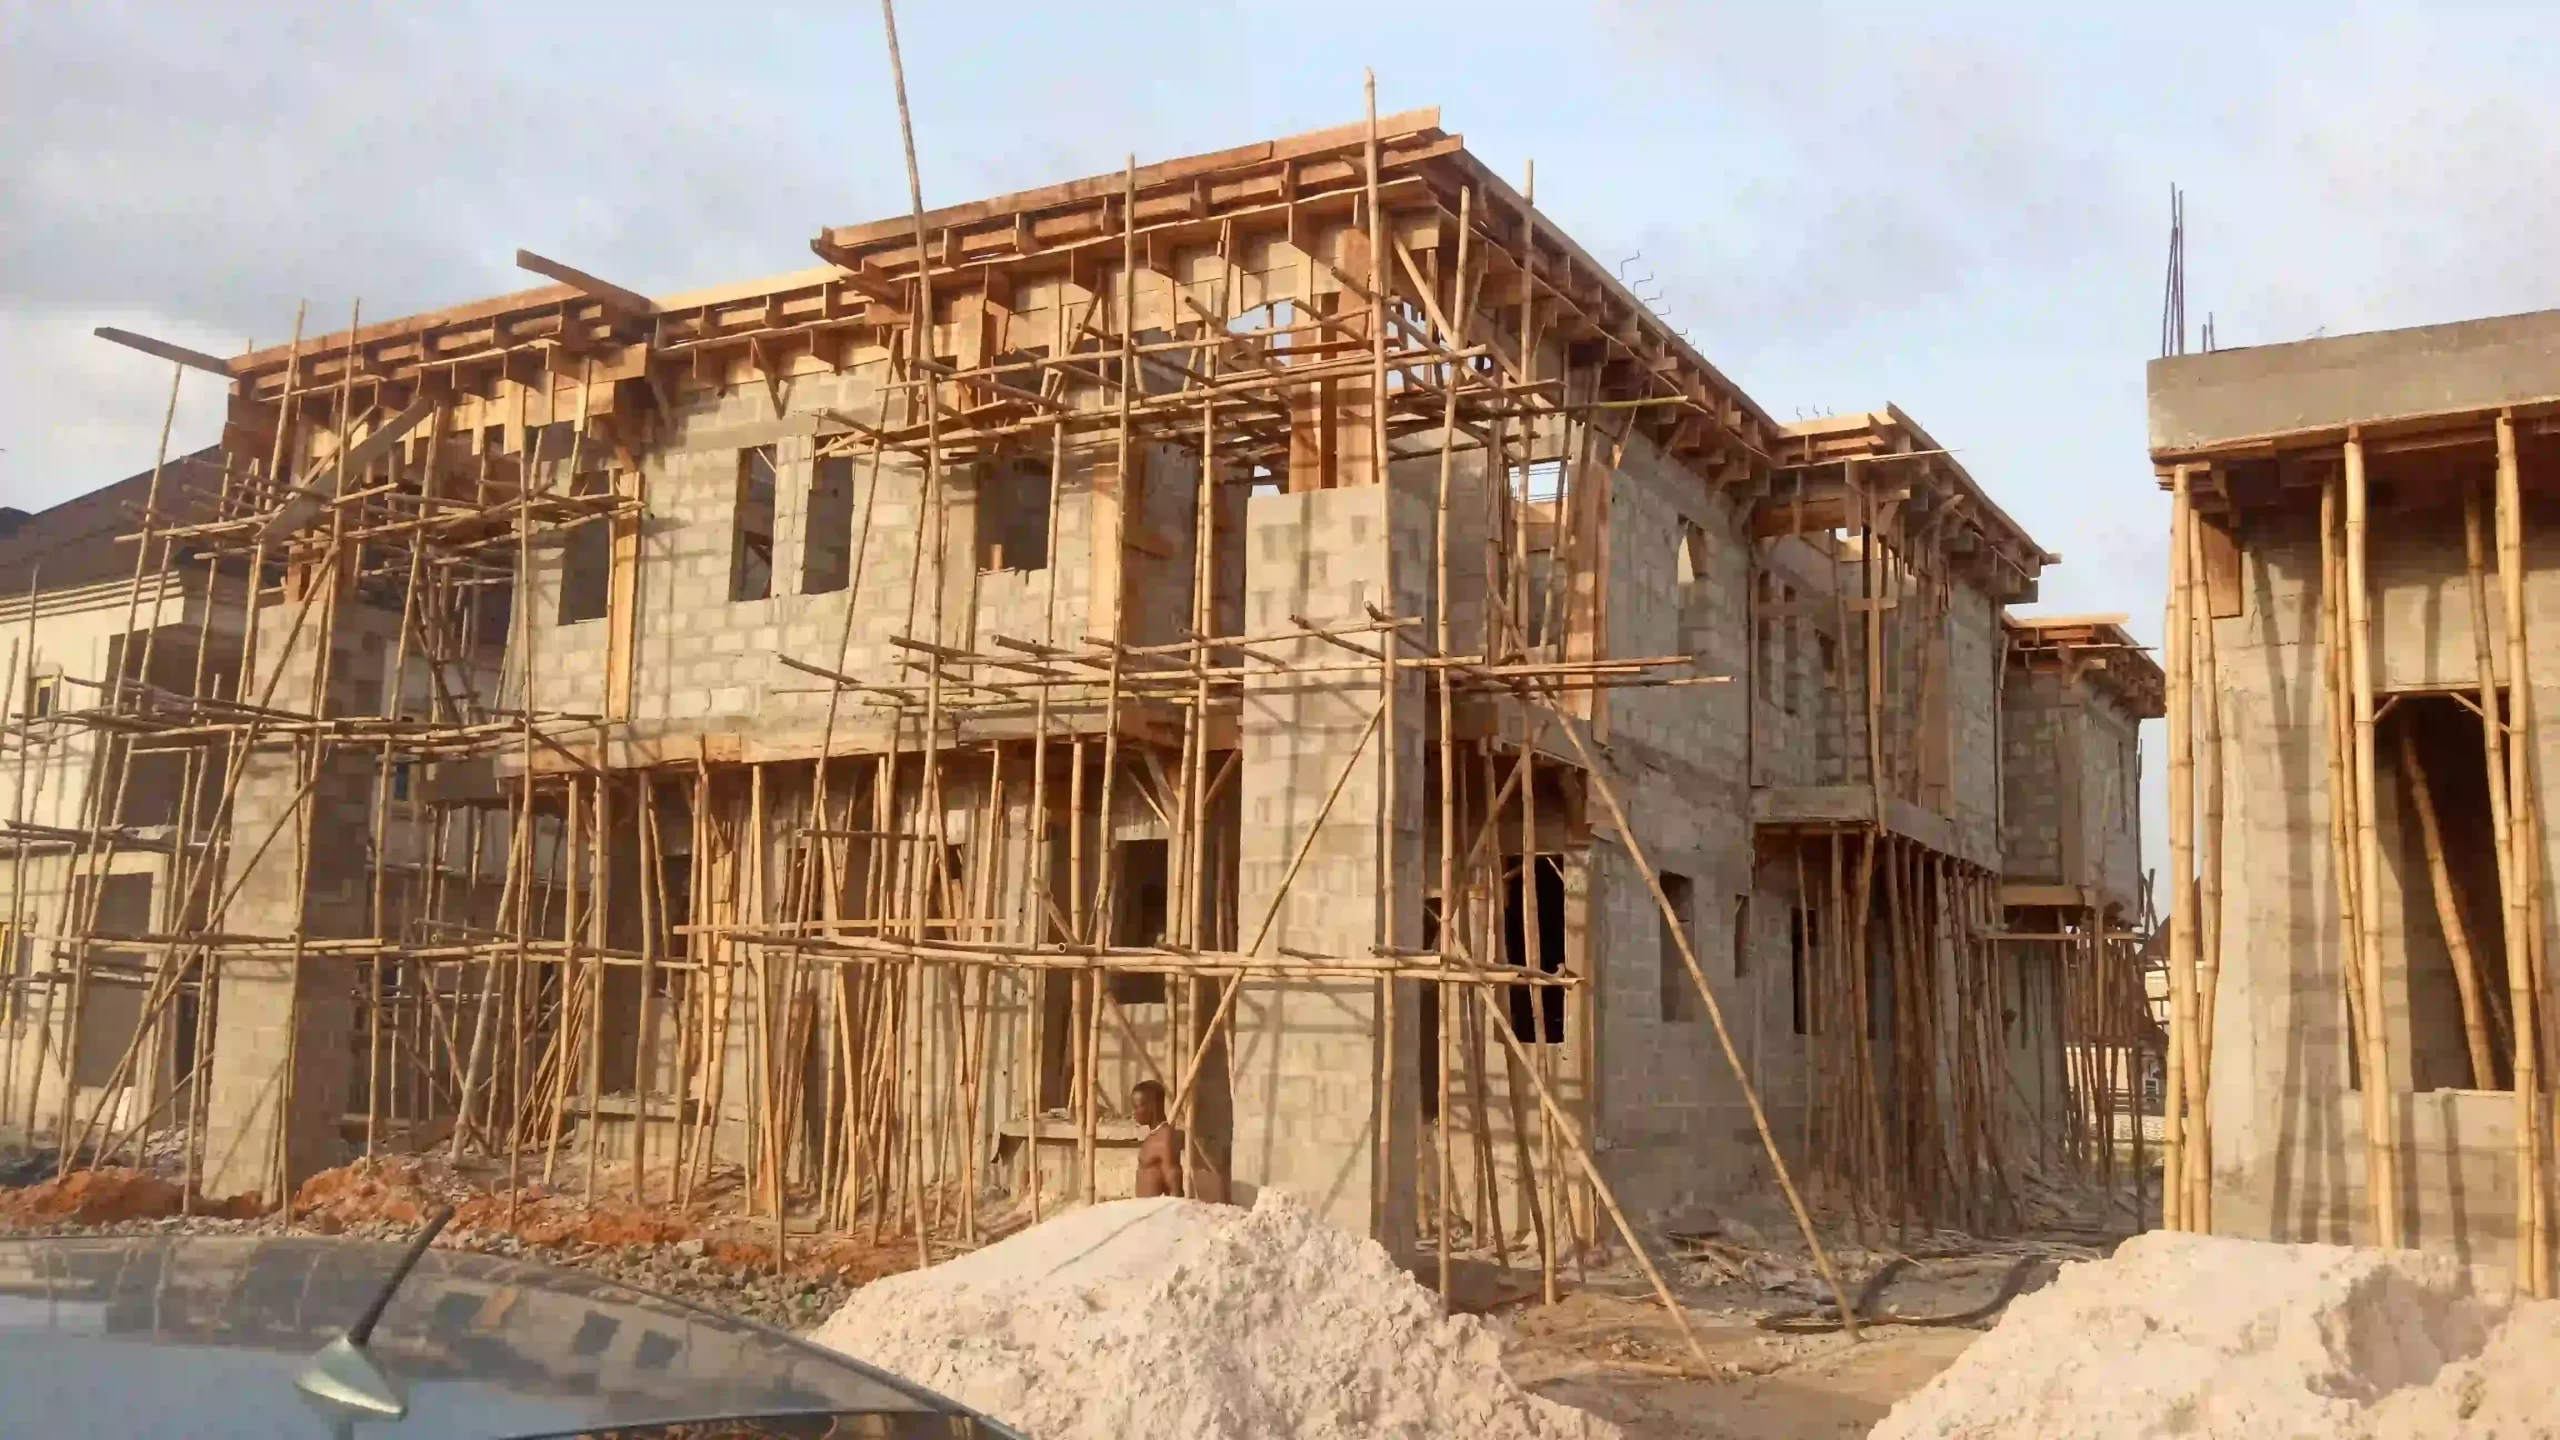 6 Bedroom duplex house plans in Nigeria